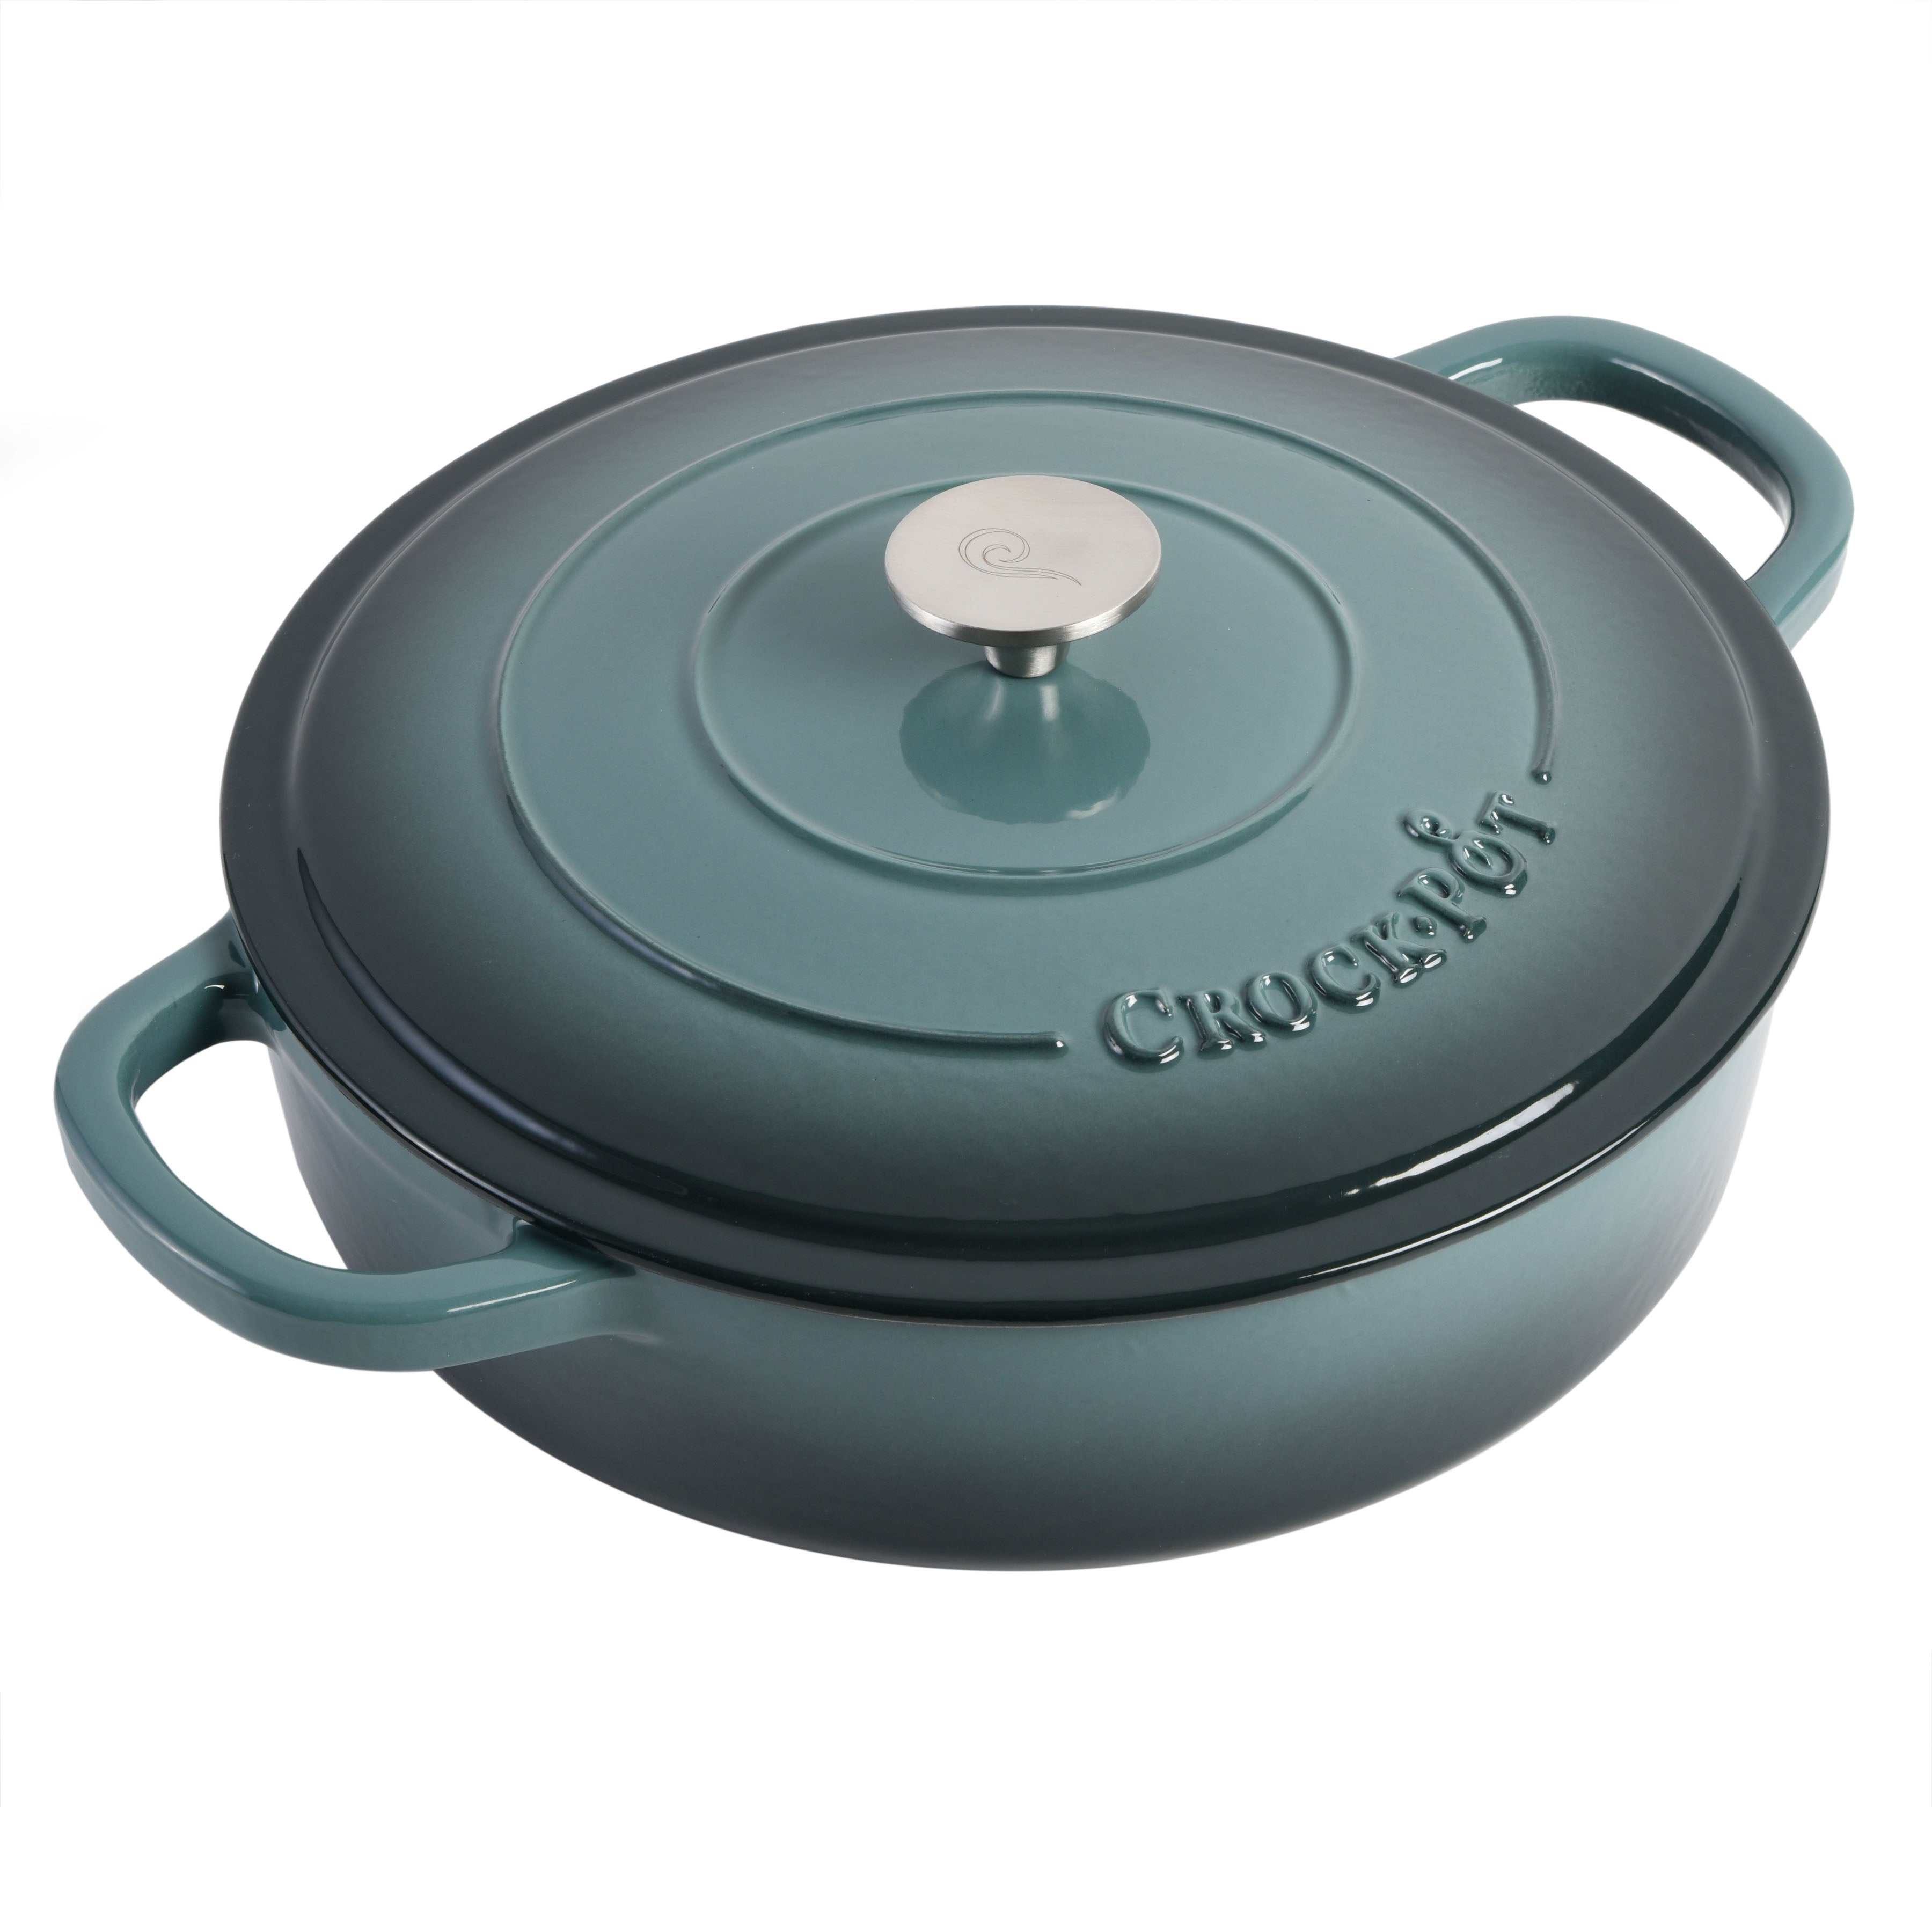 Crock-pot Artisan 5 qt. Round Pistachio Green Enameled Cast Iron Braiser Pan with Self Basting Lid